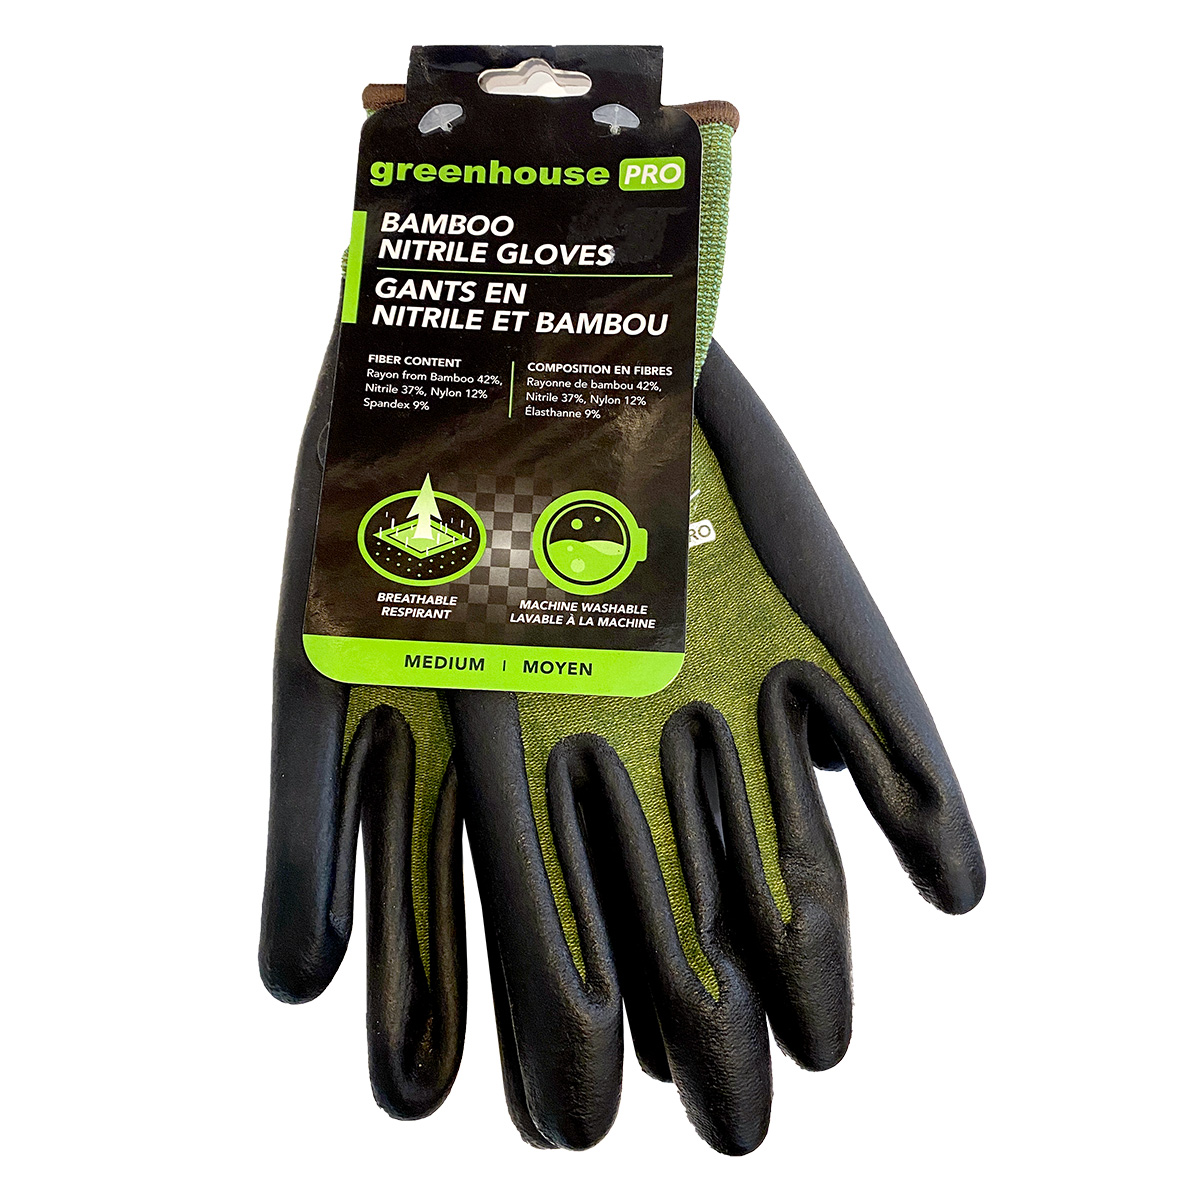 GREENHOUSE PRO Bamboo Nitrile Gloves LARGE